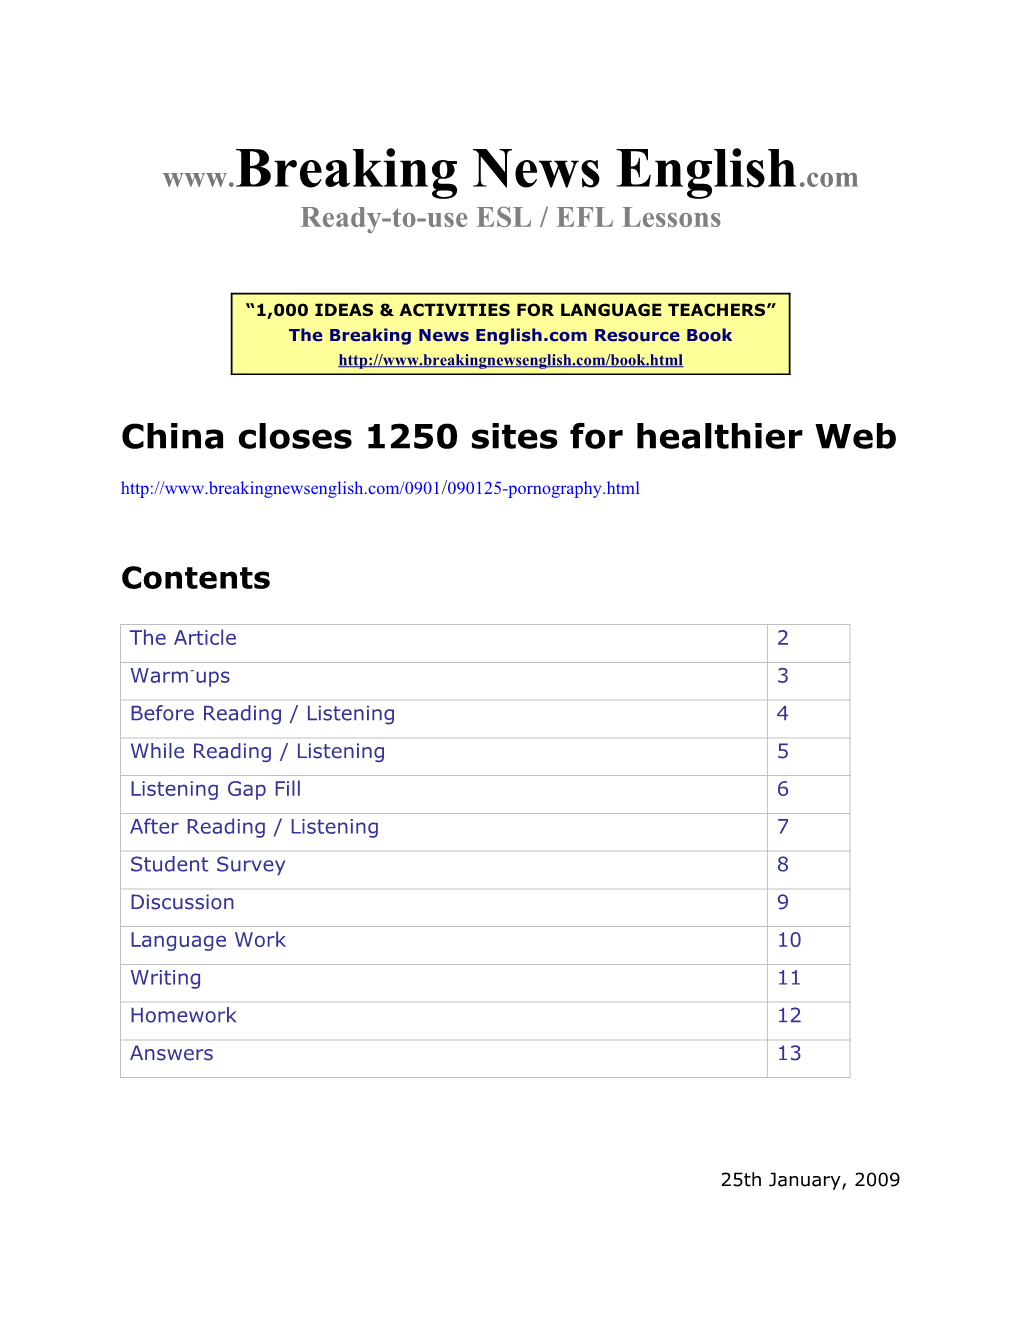 ESL Lesson: China Closes 1250 Sites for Healthier Web